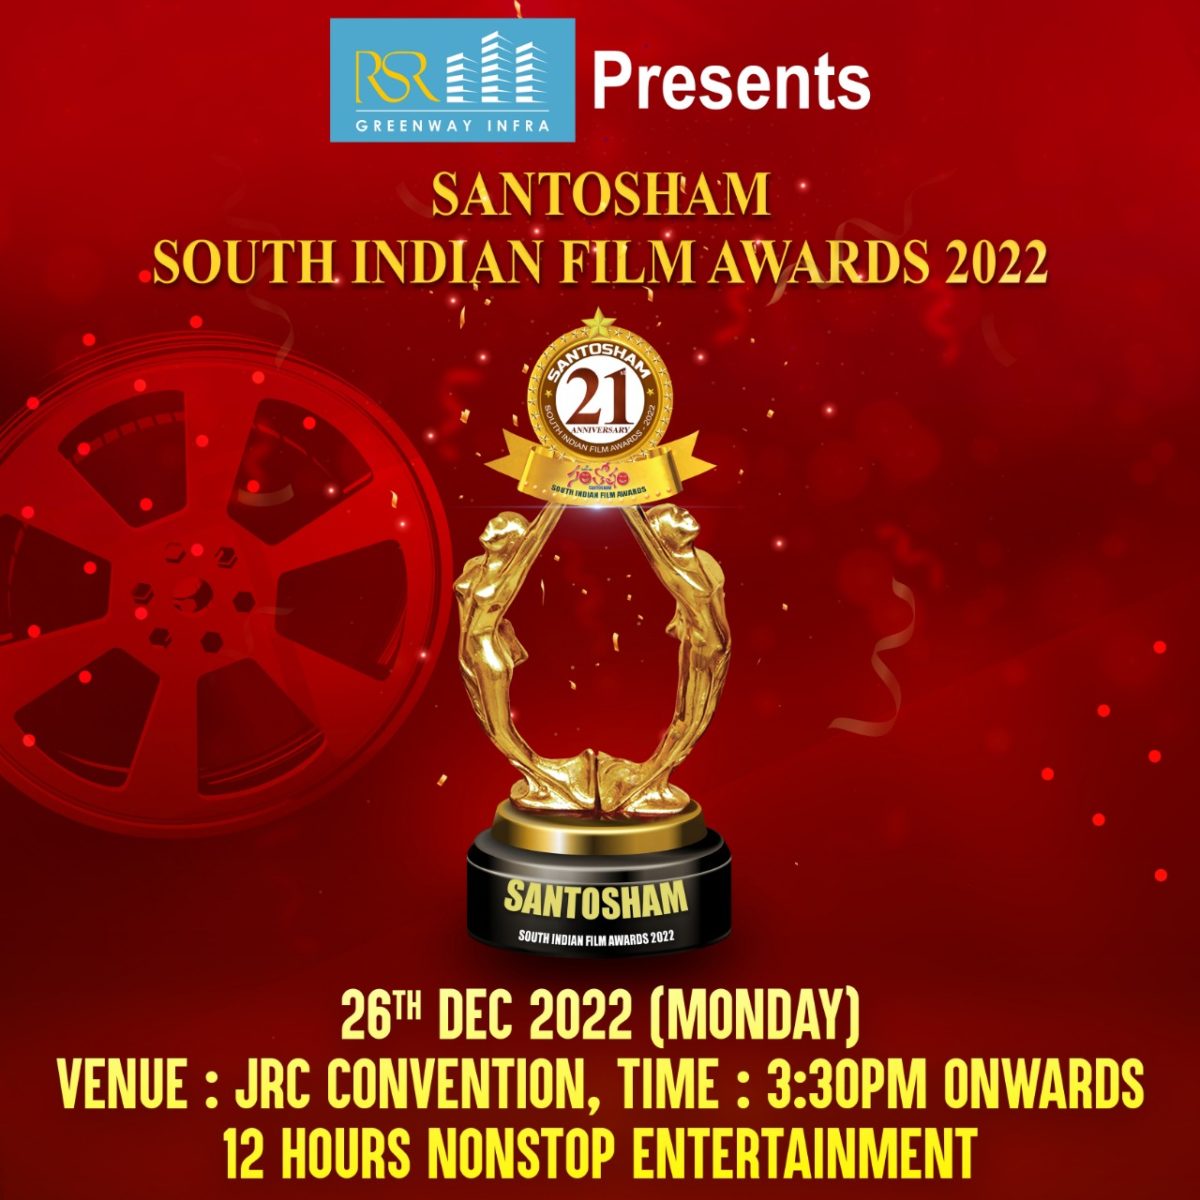 Date & Venue locked for Santosham Awards 2022